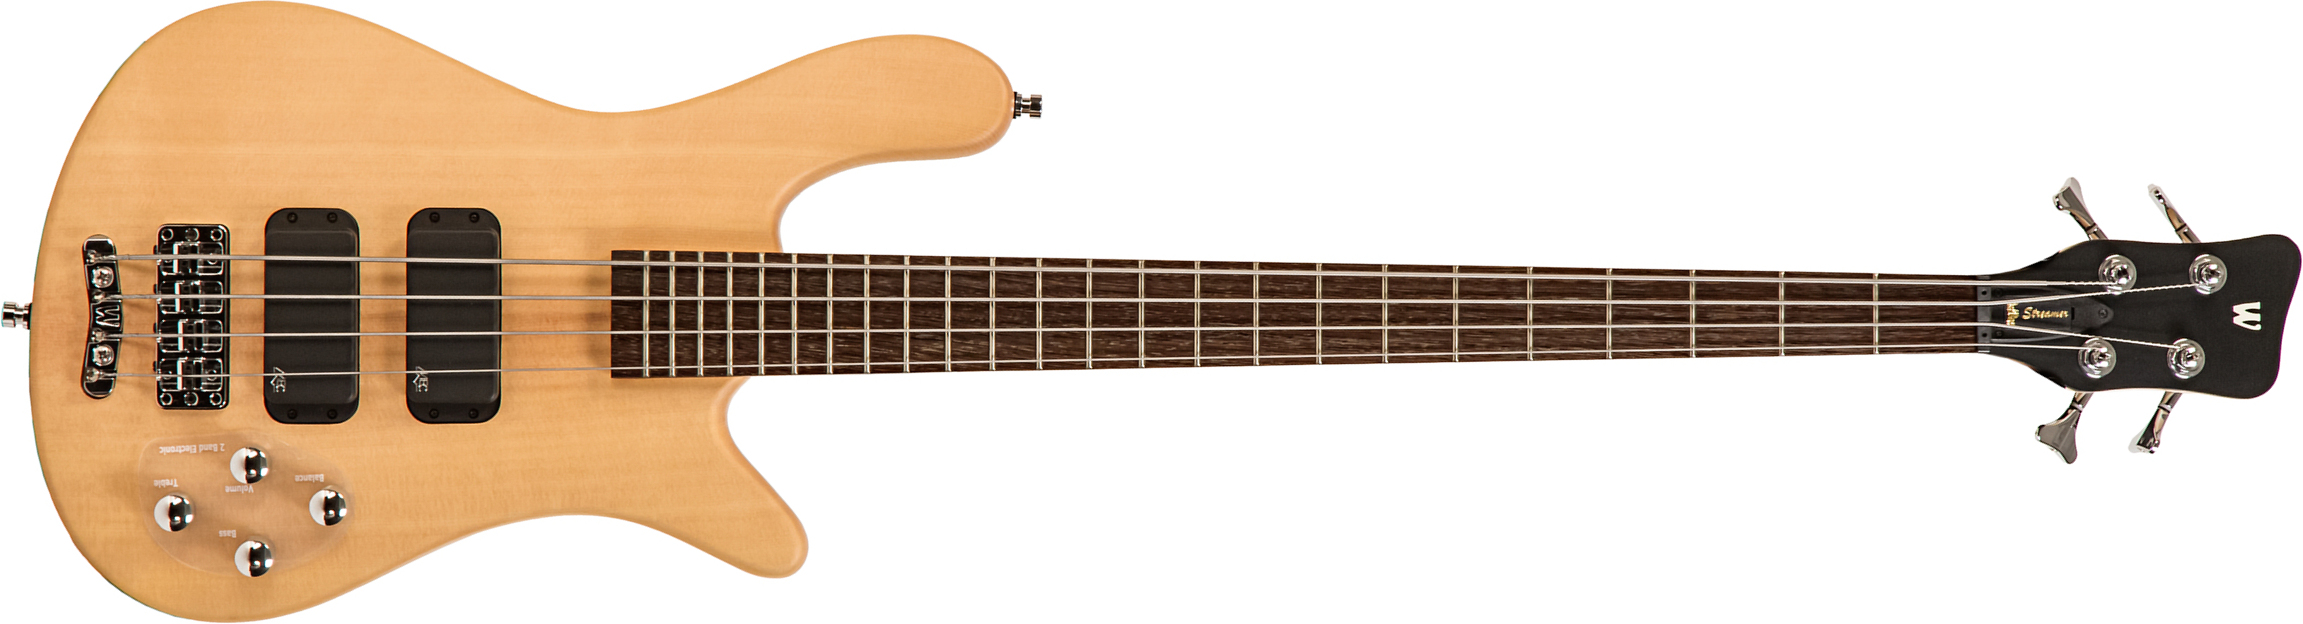 Warwick Streamer Standard Rockbass 4c Active Wen - Natural Satin - Solid body electric bass - Main picture